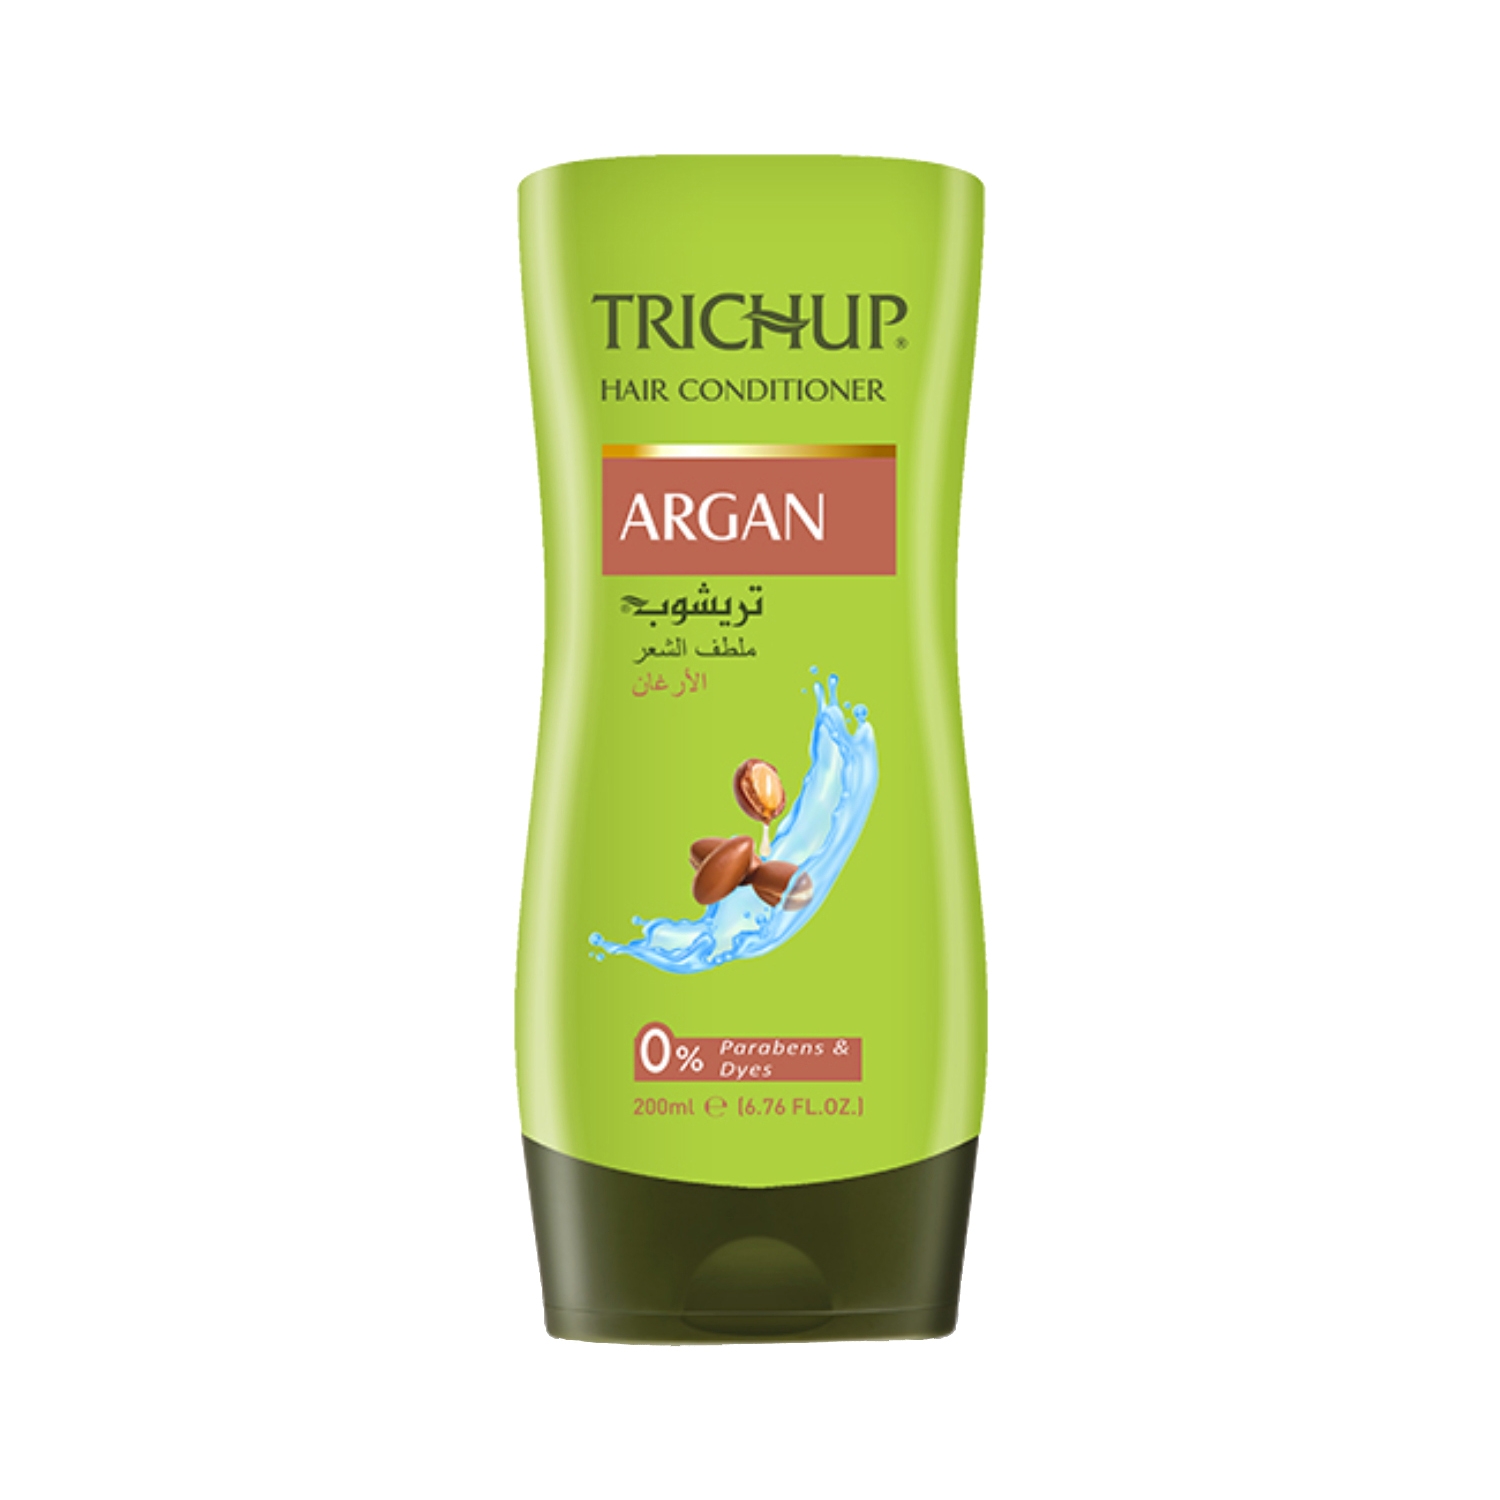 Trichup | Trichup Argan Hair Conditioner (200ml)